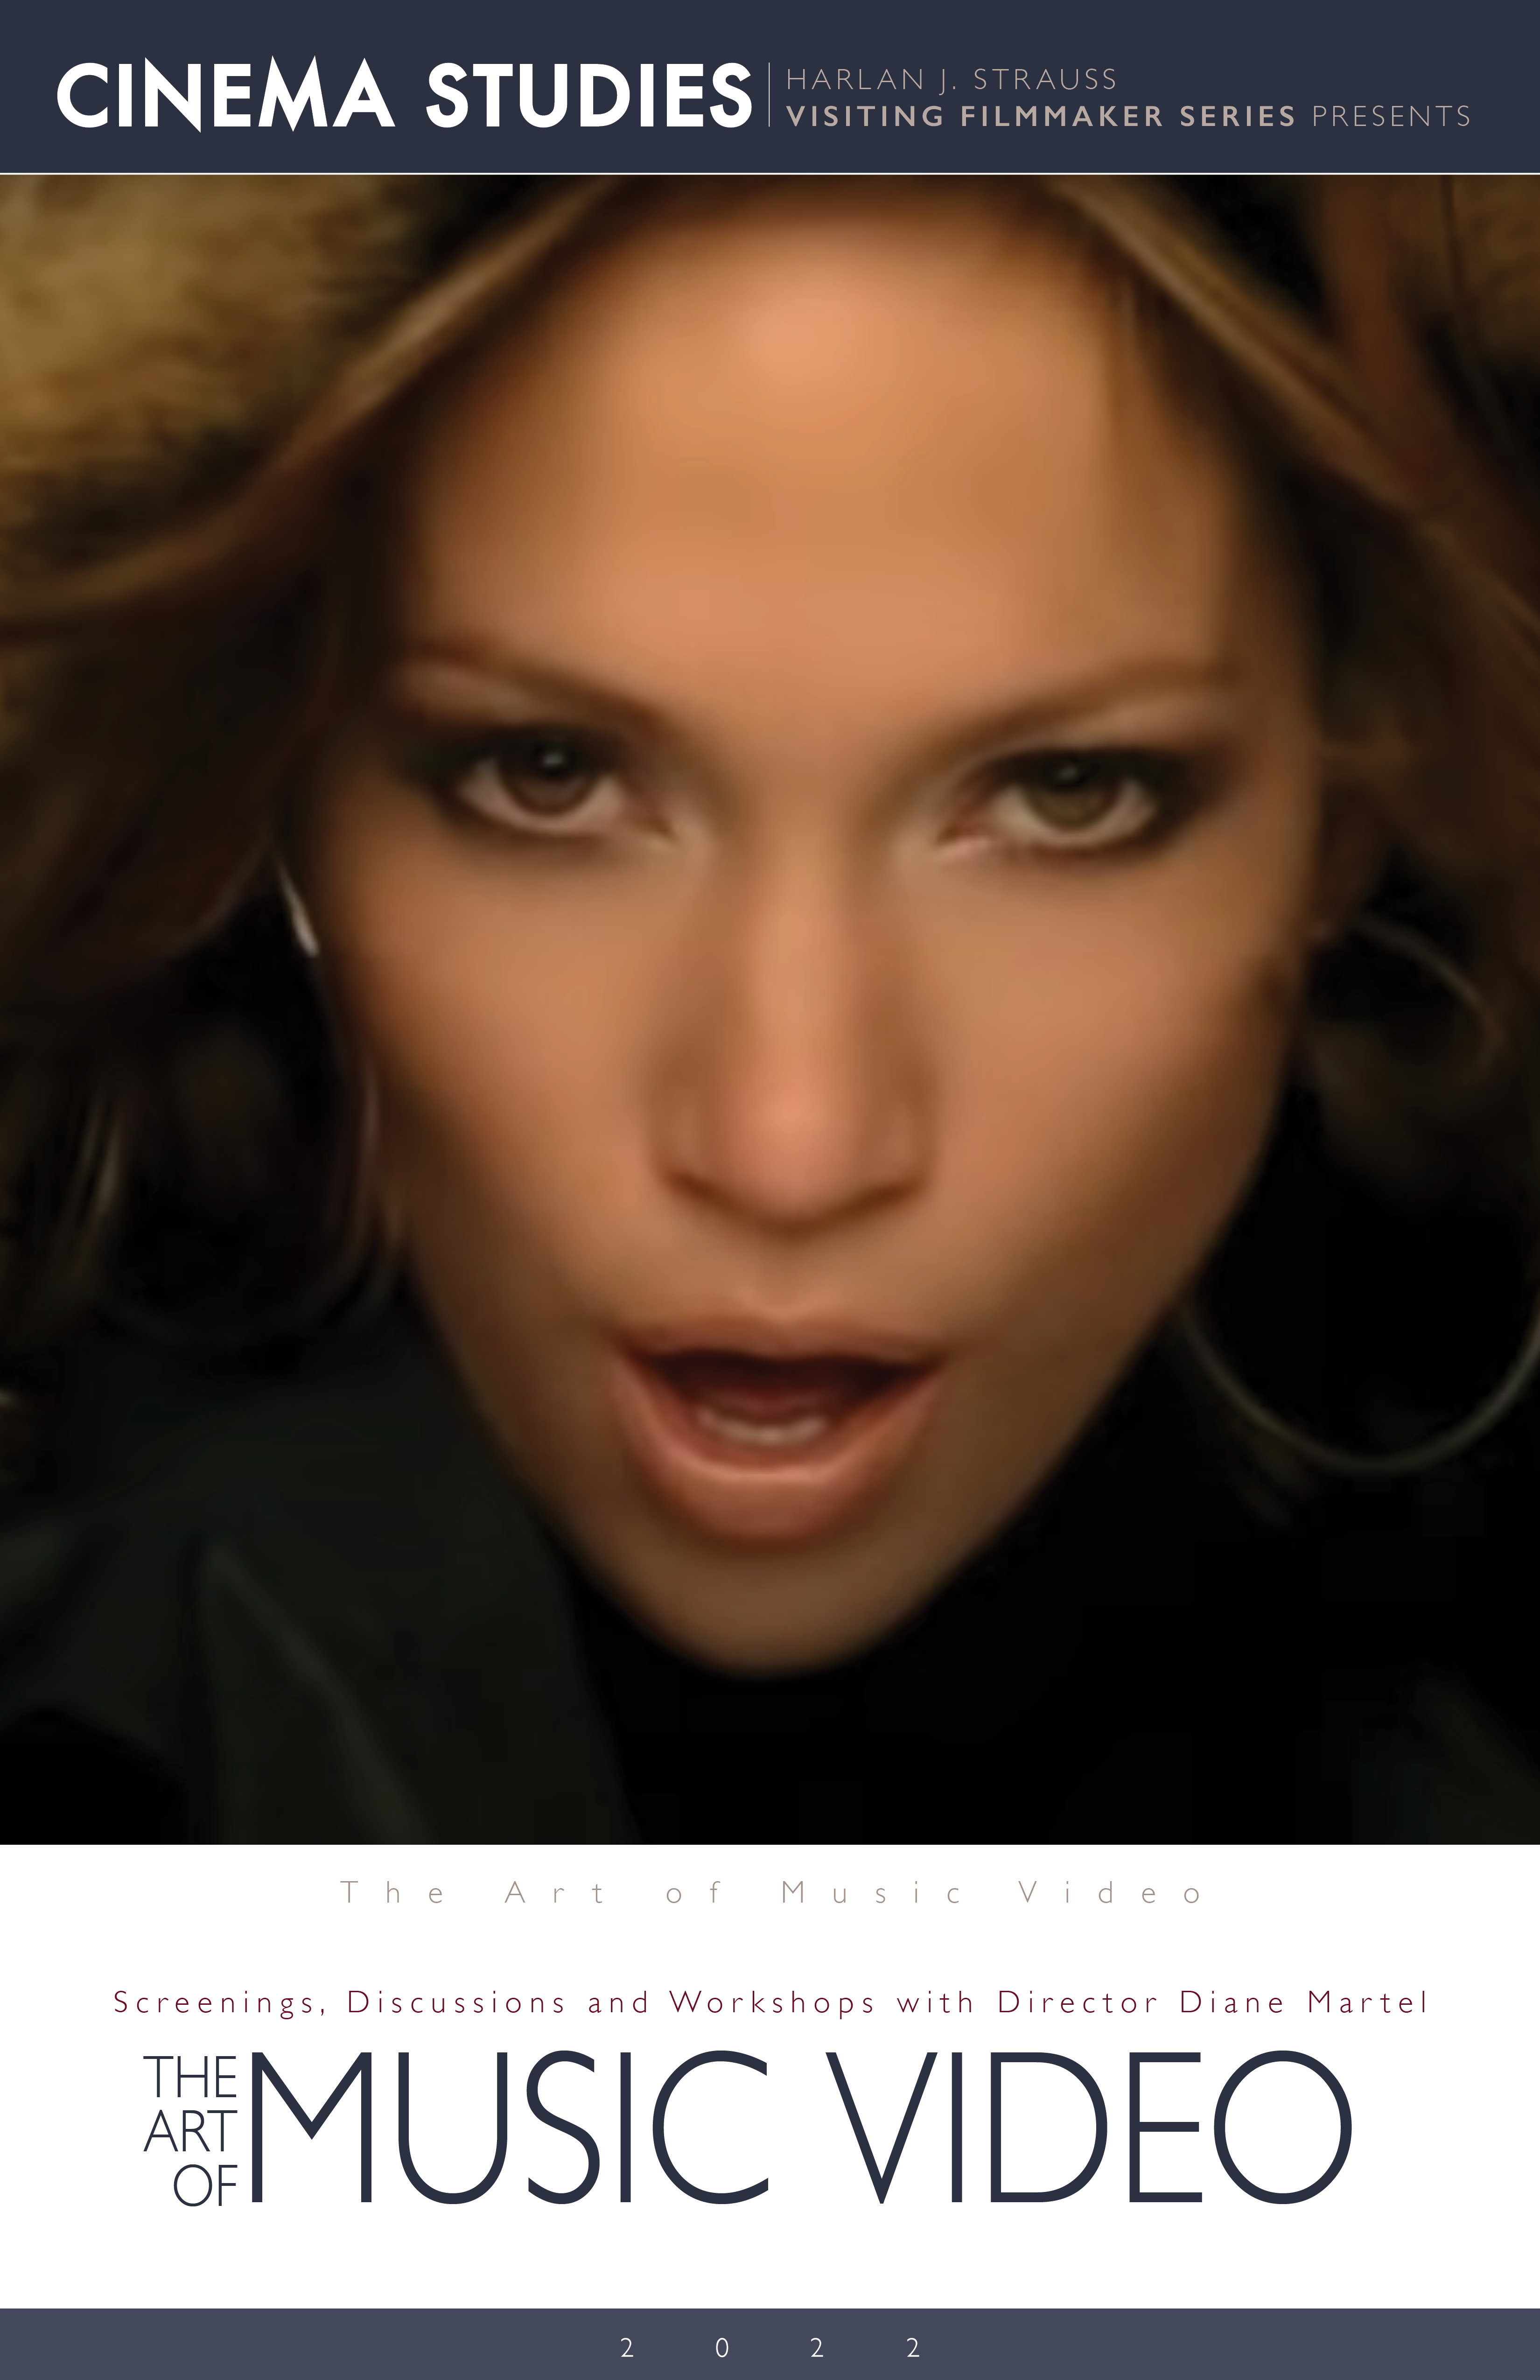 The Art of Music Video. Photo of Jennifer Lopez